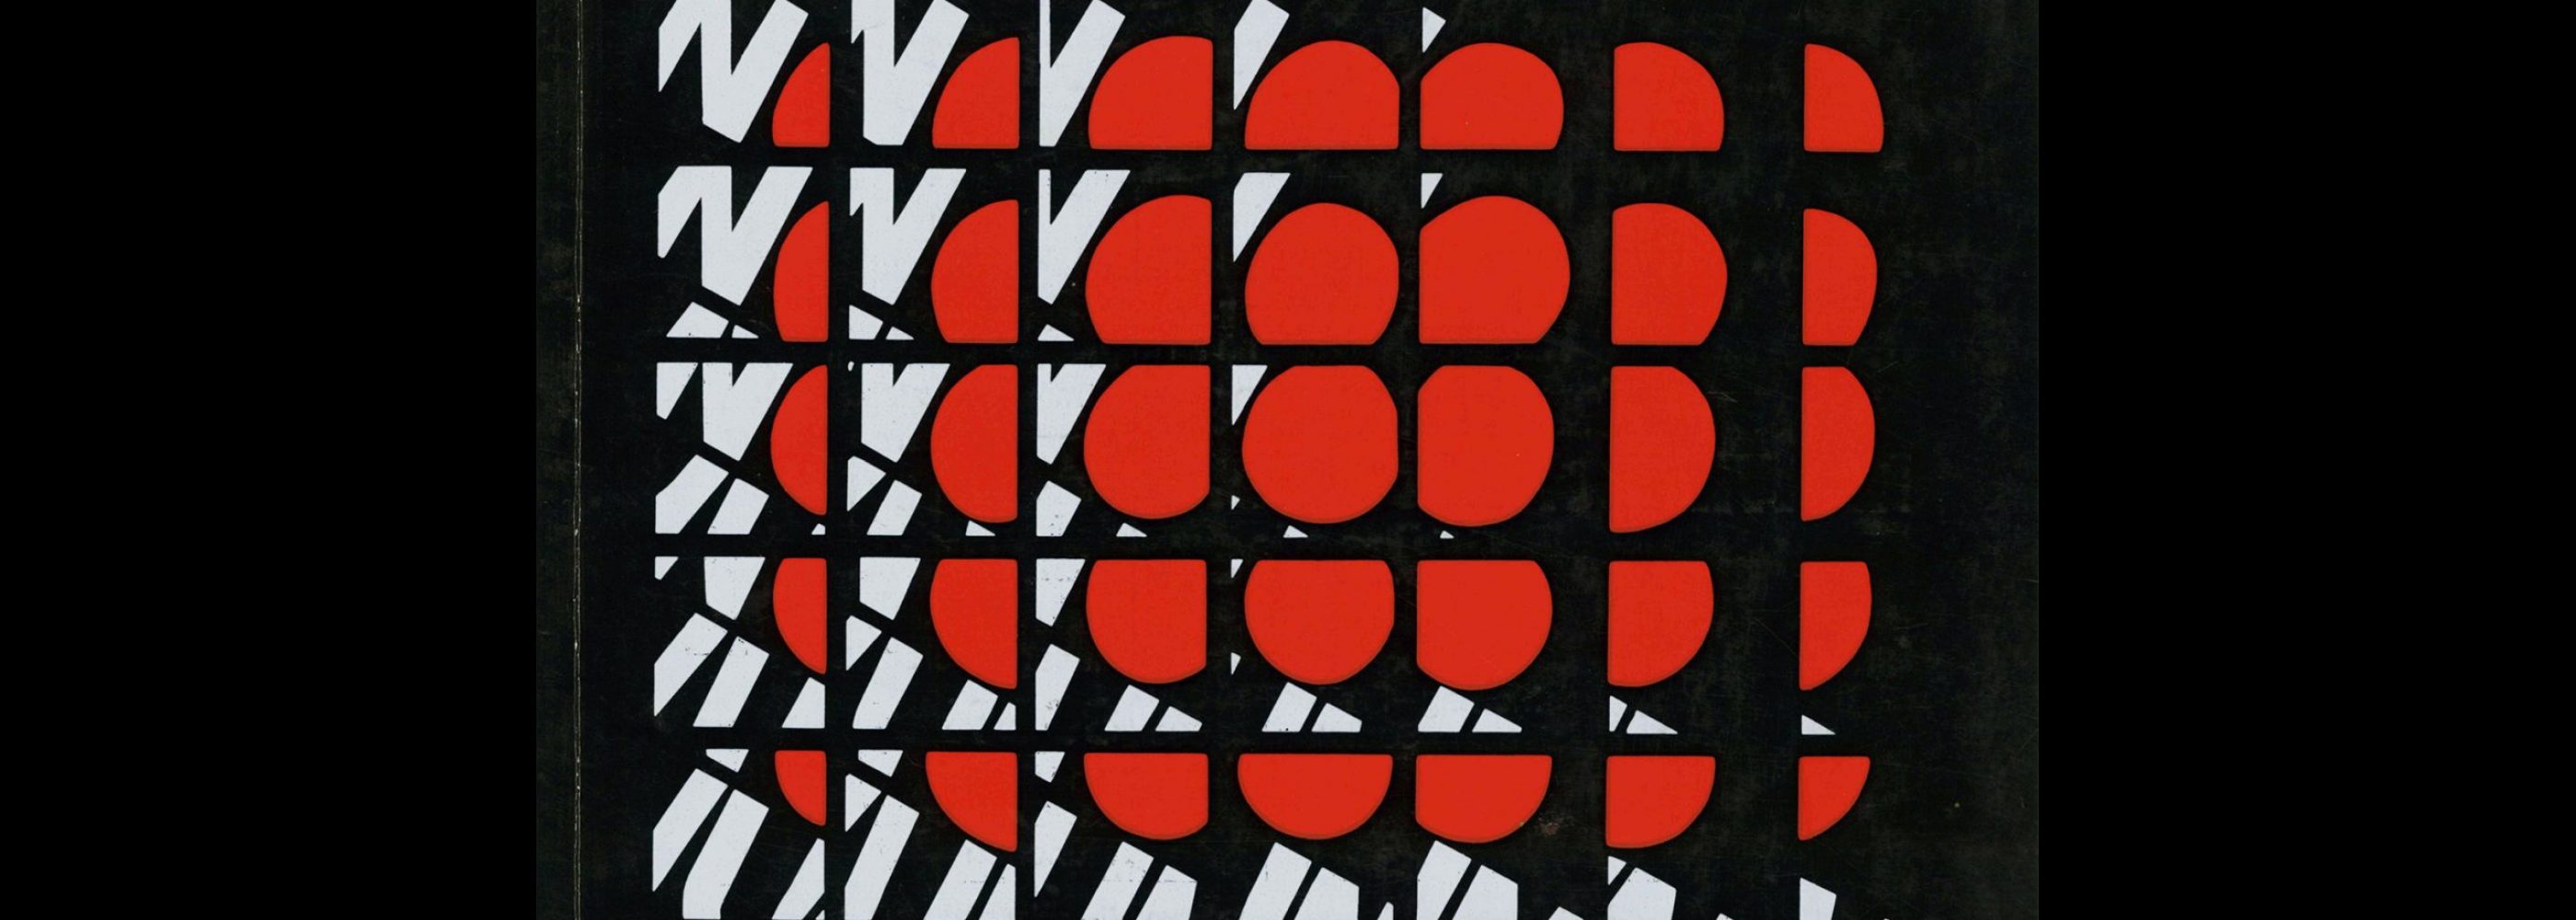 Novum Gebrauchsgraphik, 8, 1974. Cover design by Siegried Himmer